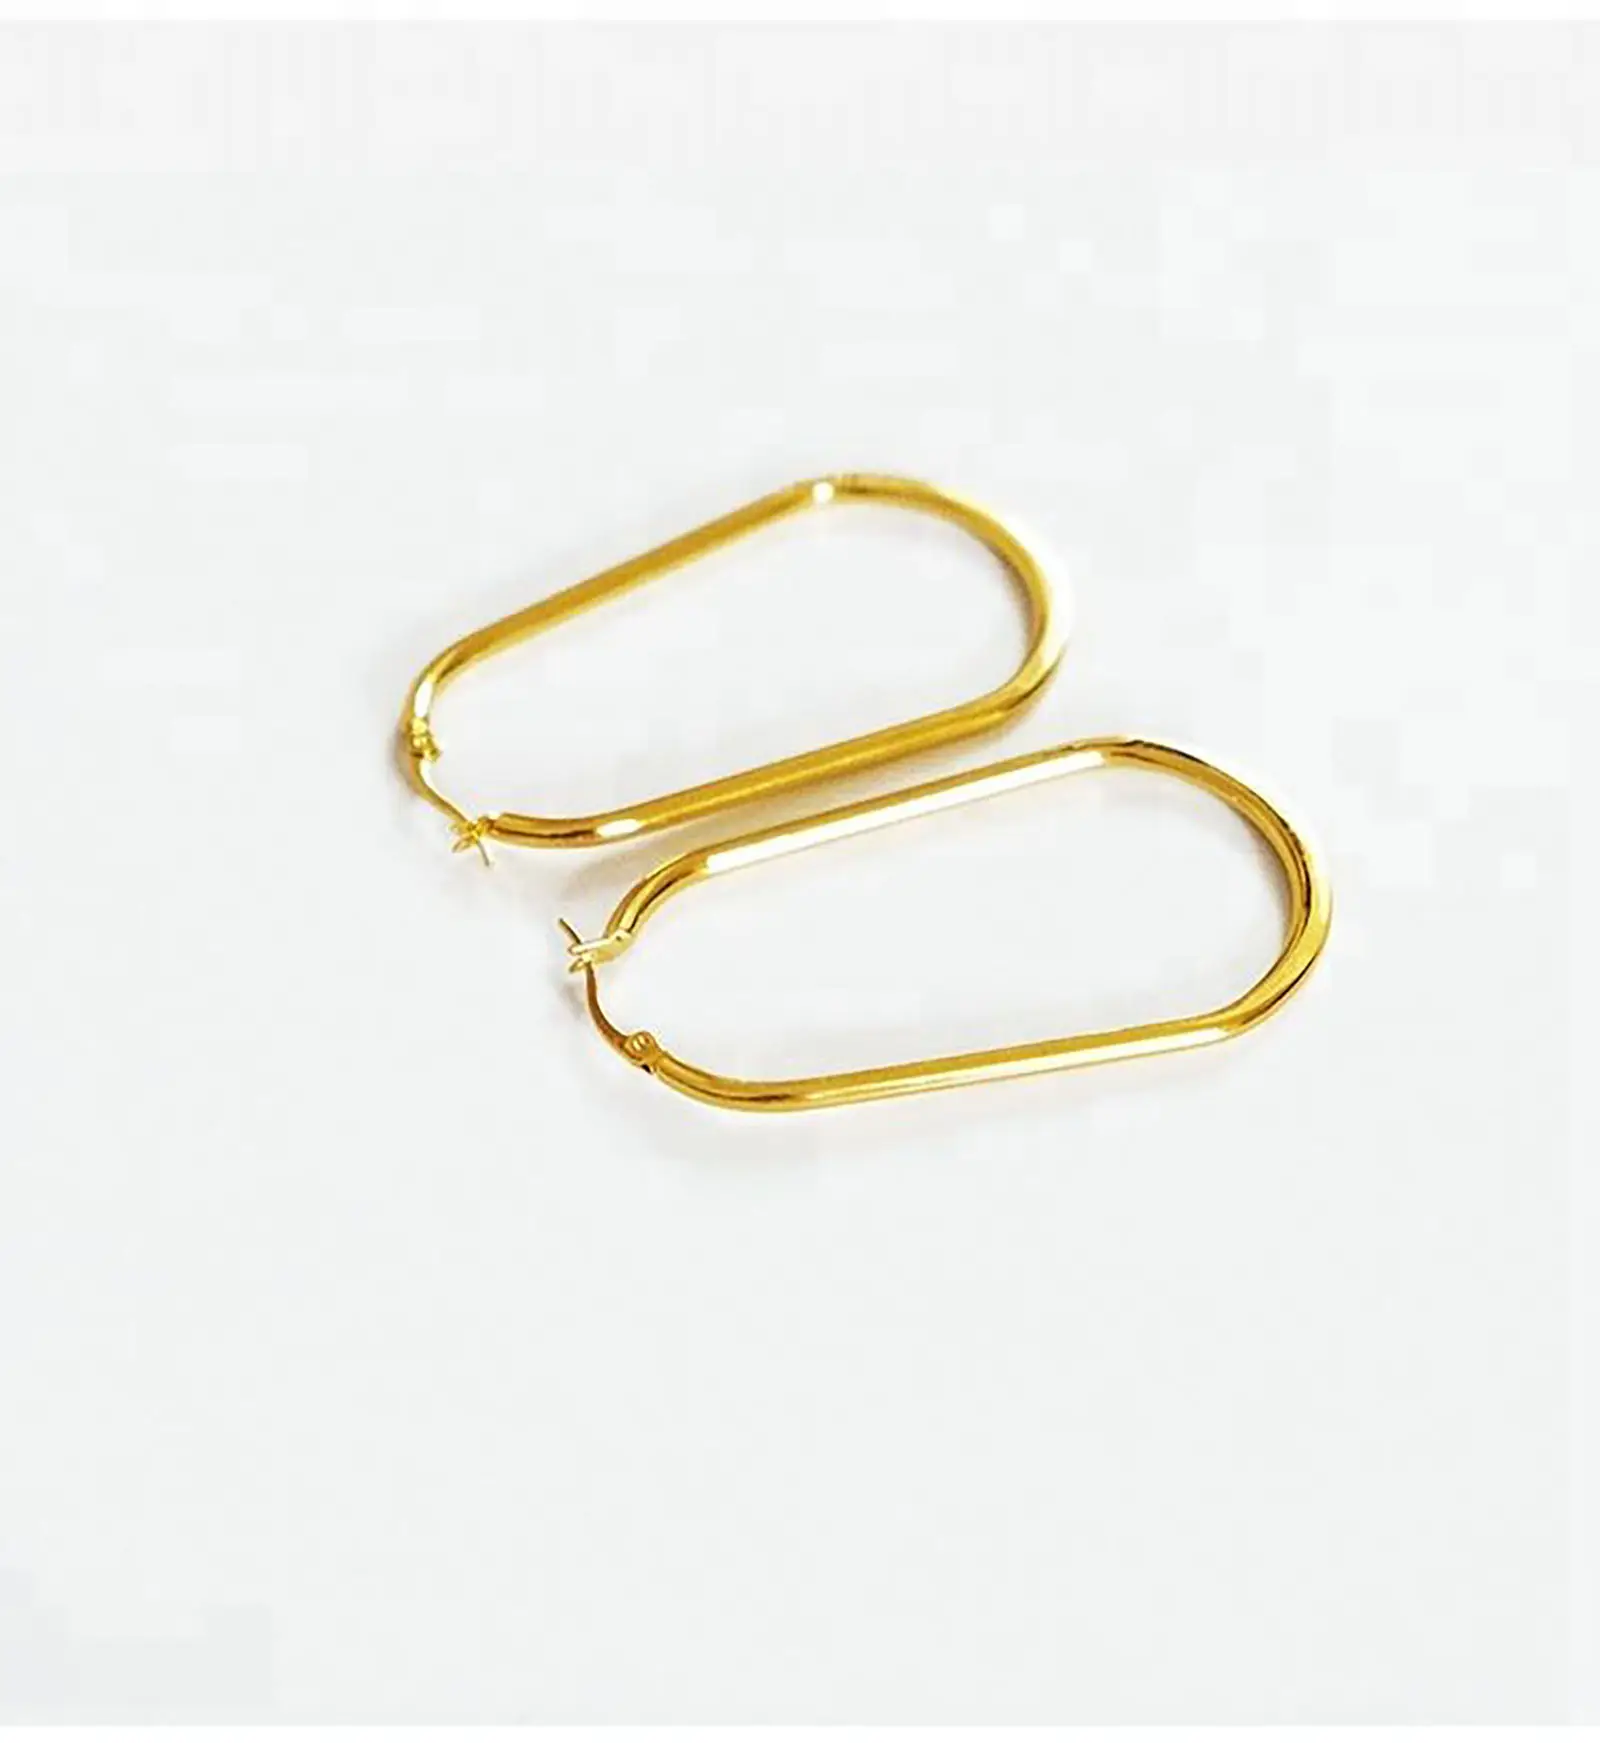 OEM hele jewelry Dubai gold plated new model online wholesale jhumka earrings